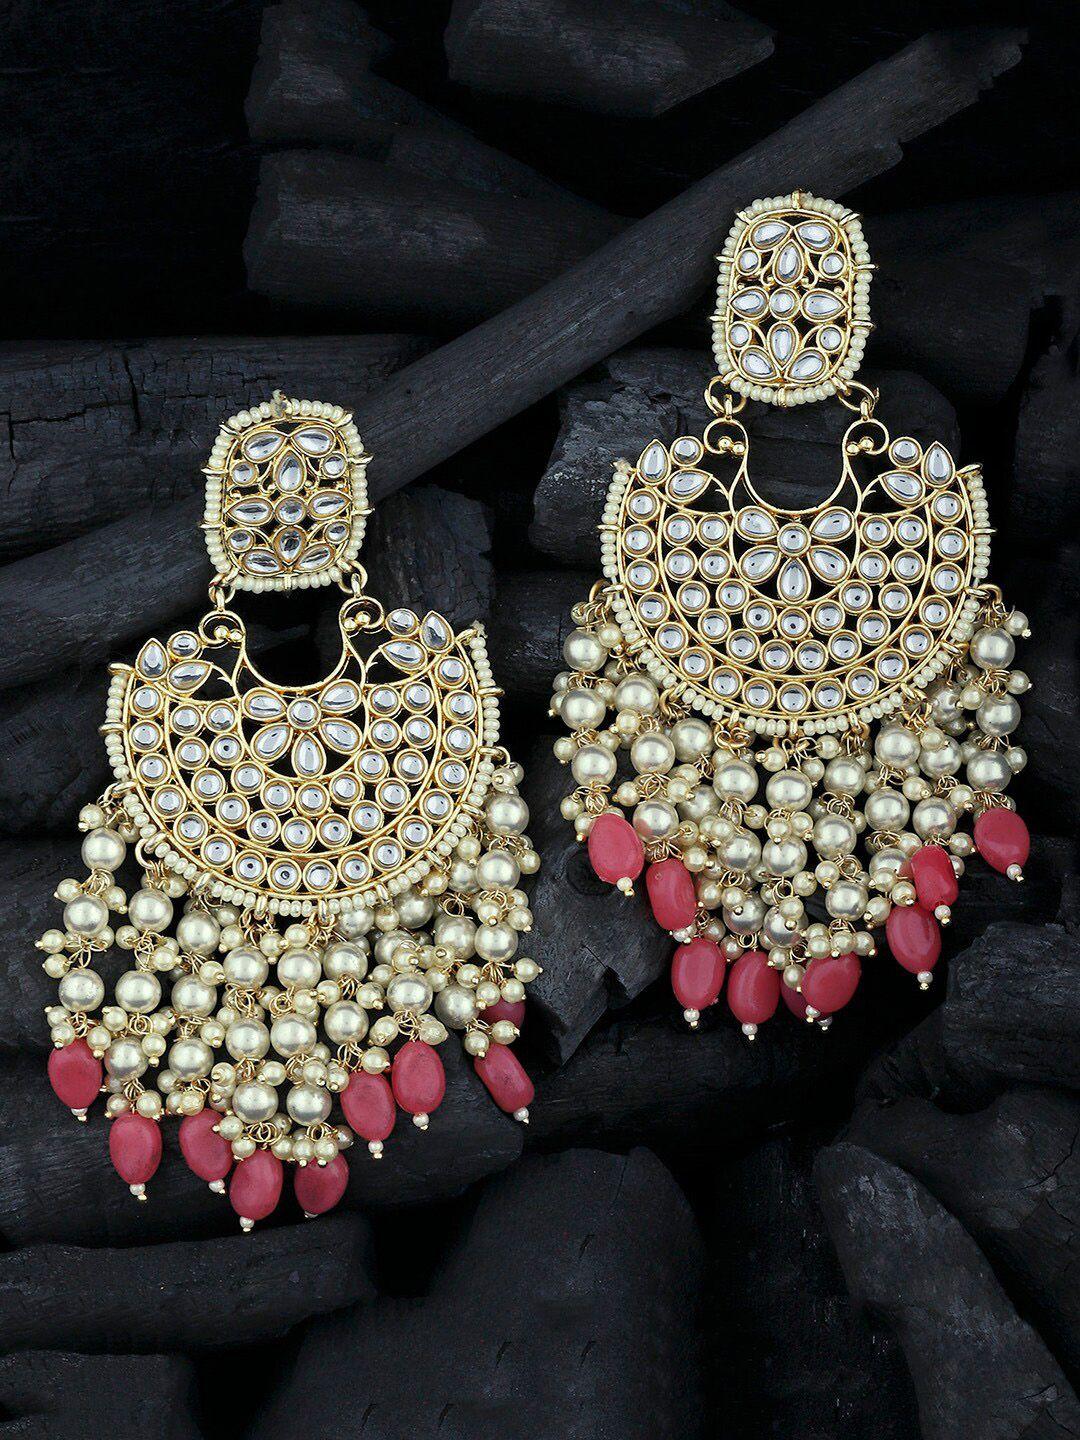 alamod gold-plated classic drop earrings